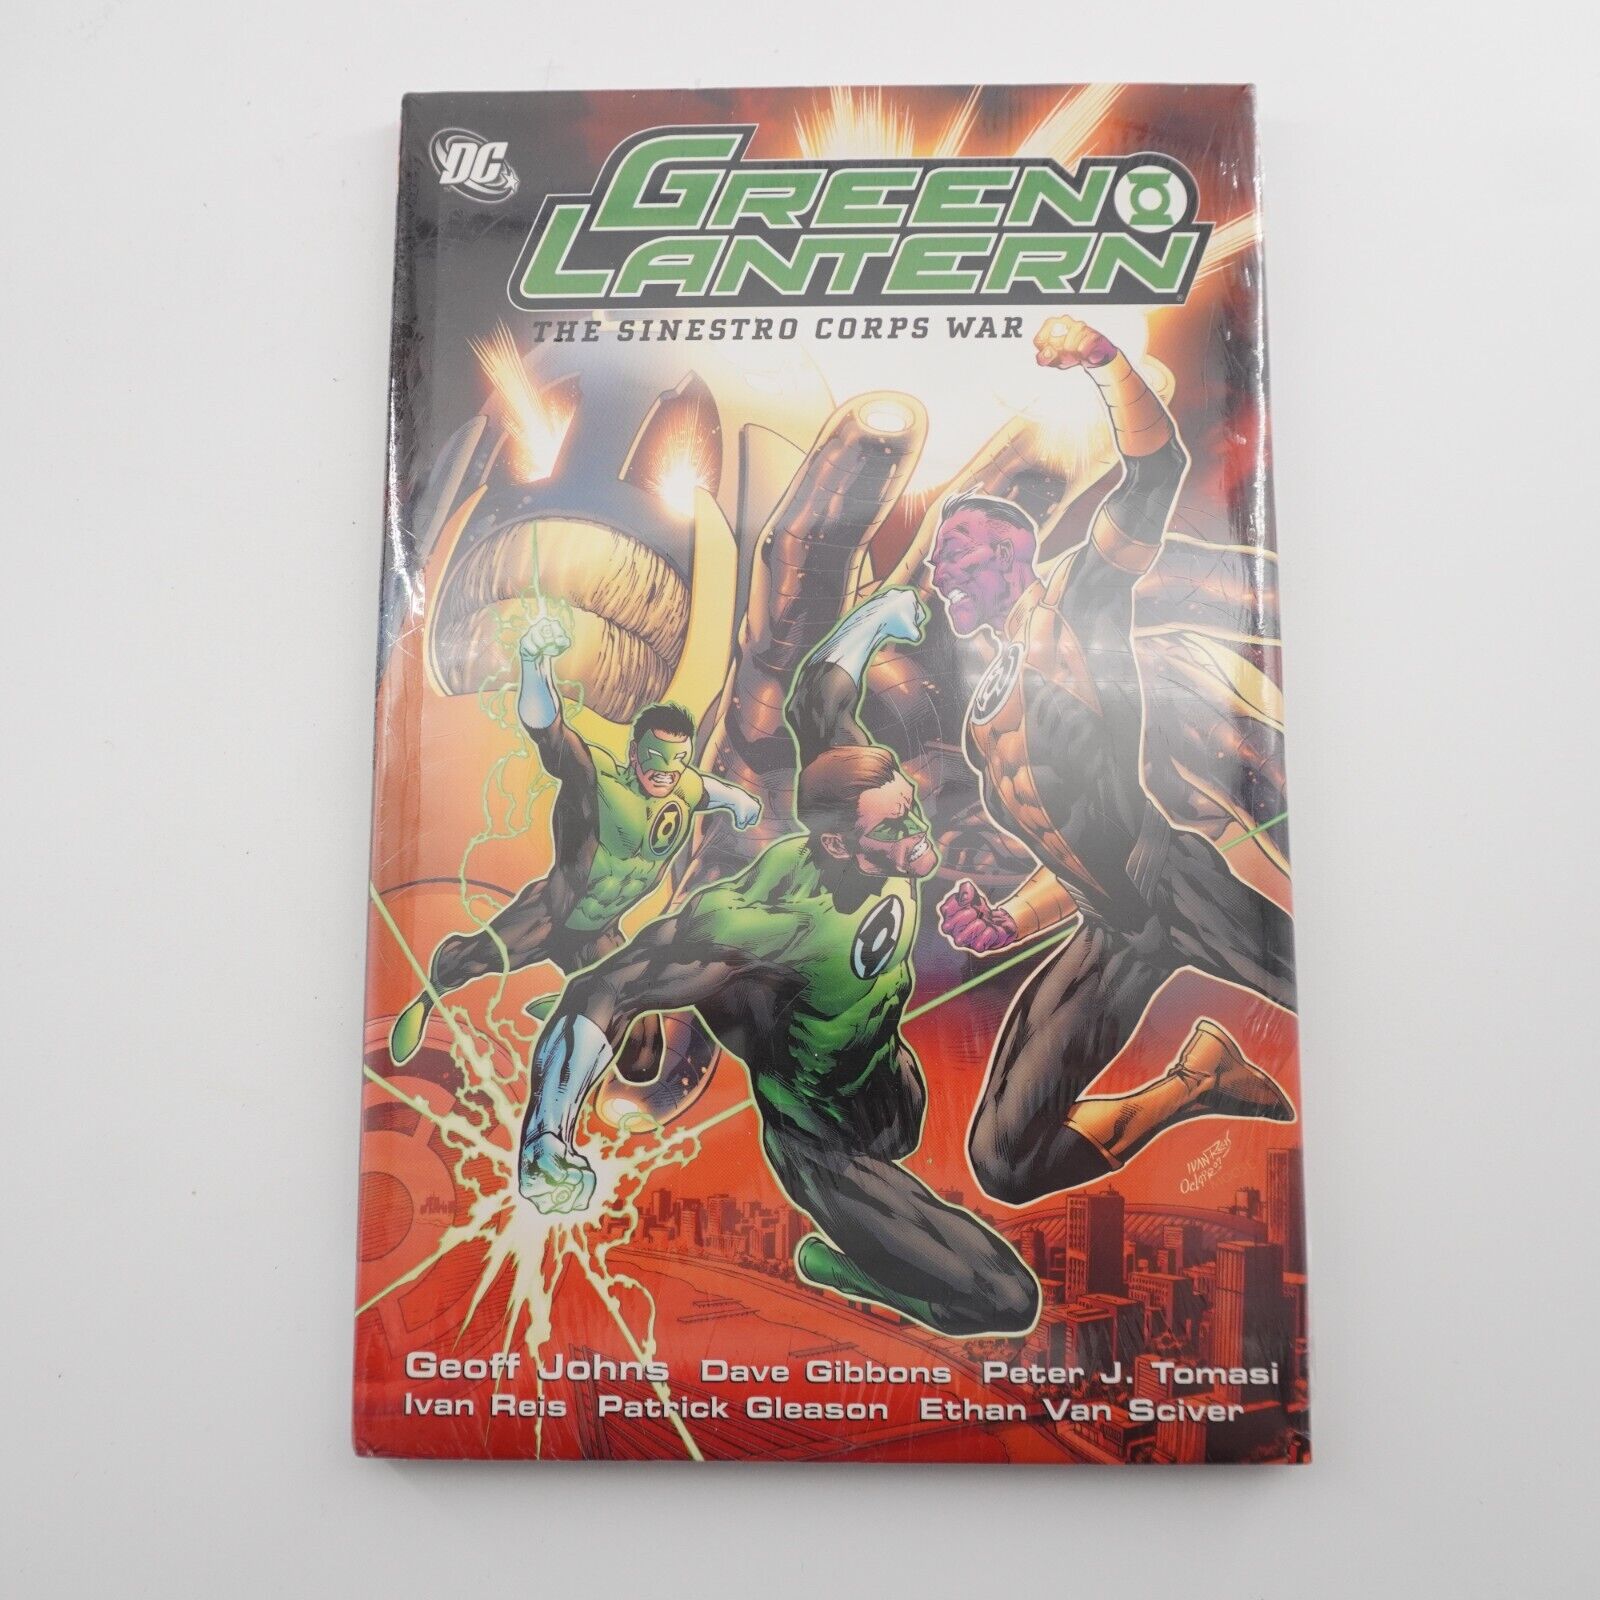 New DC Comics Green Lantern The Sinestro Corps War Vol 2 TPB Hardcover